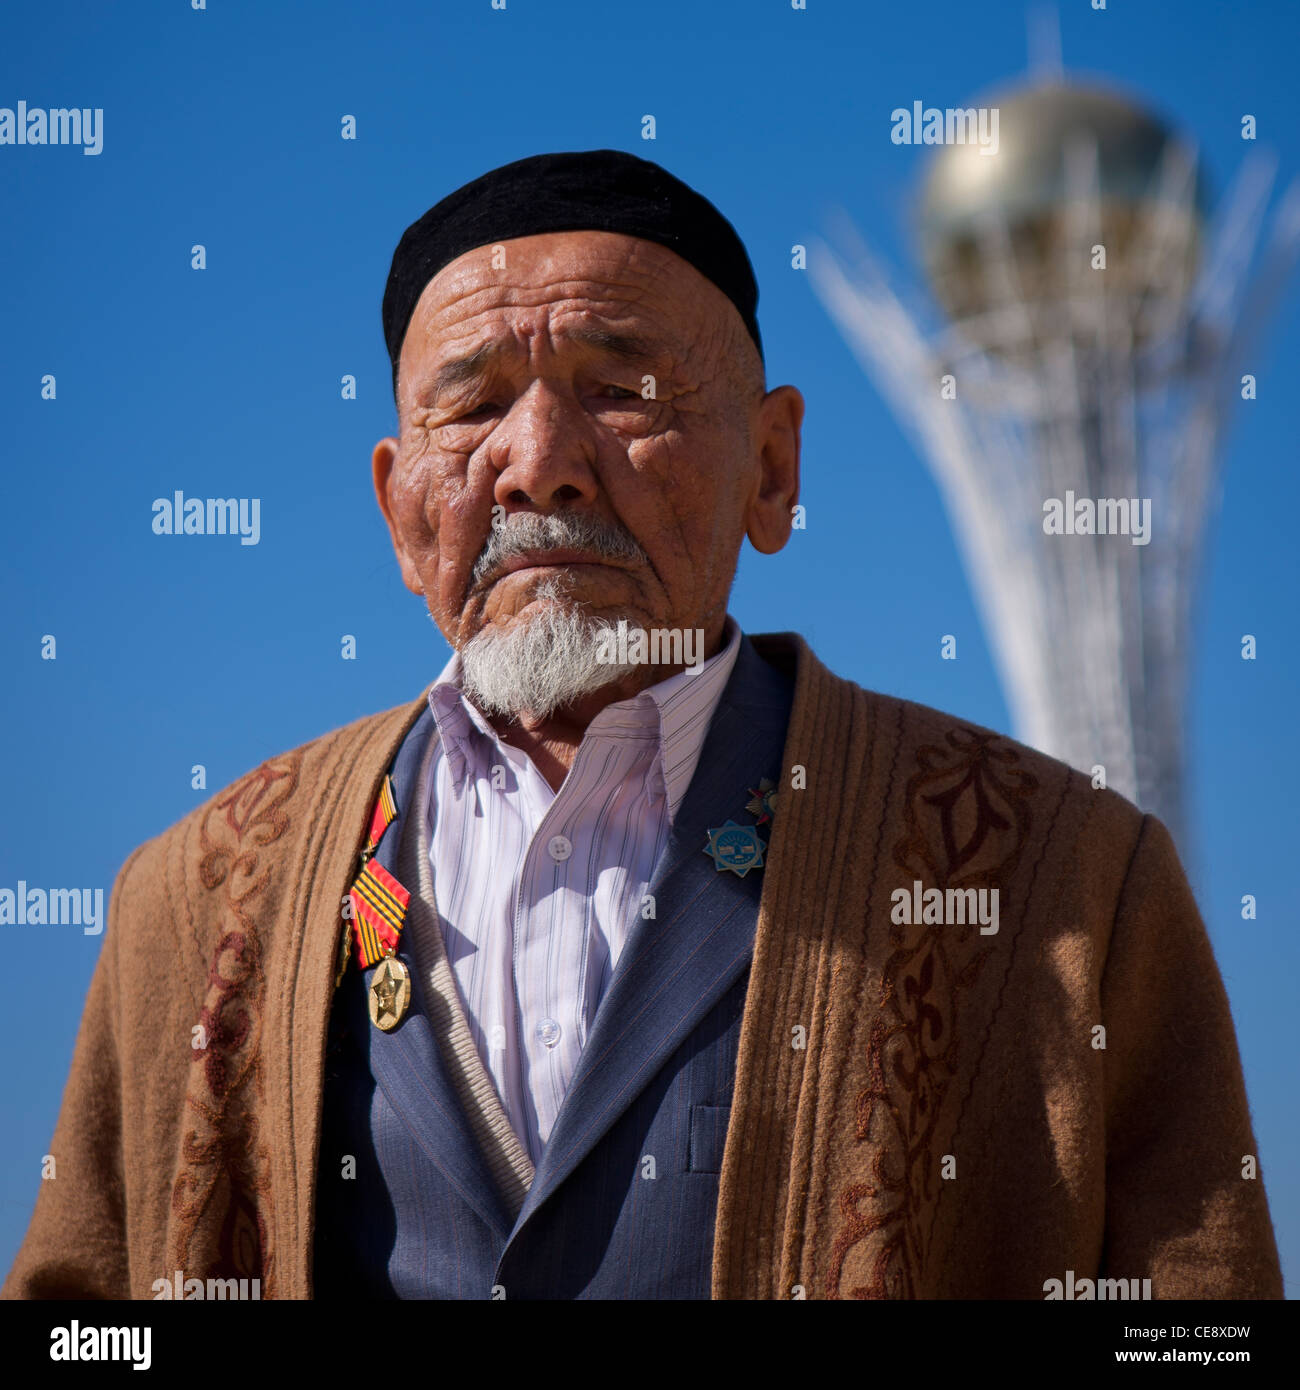 Kazakh people. Казахстан люди. Казахстанские старики. Казахский старик. Казахские аксакалы.